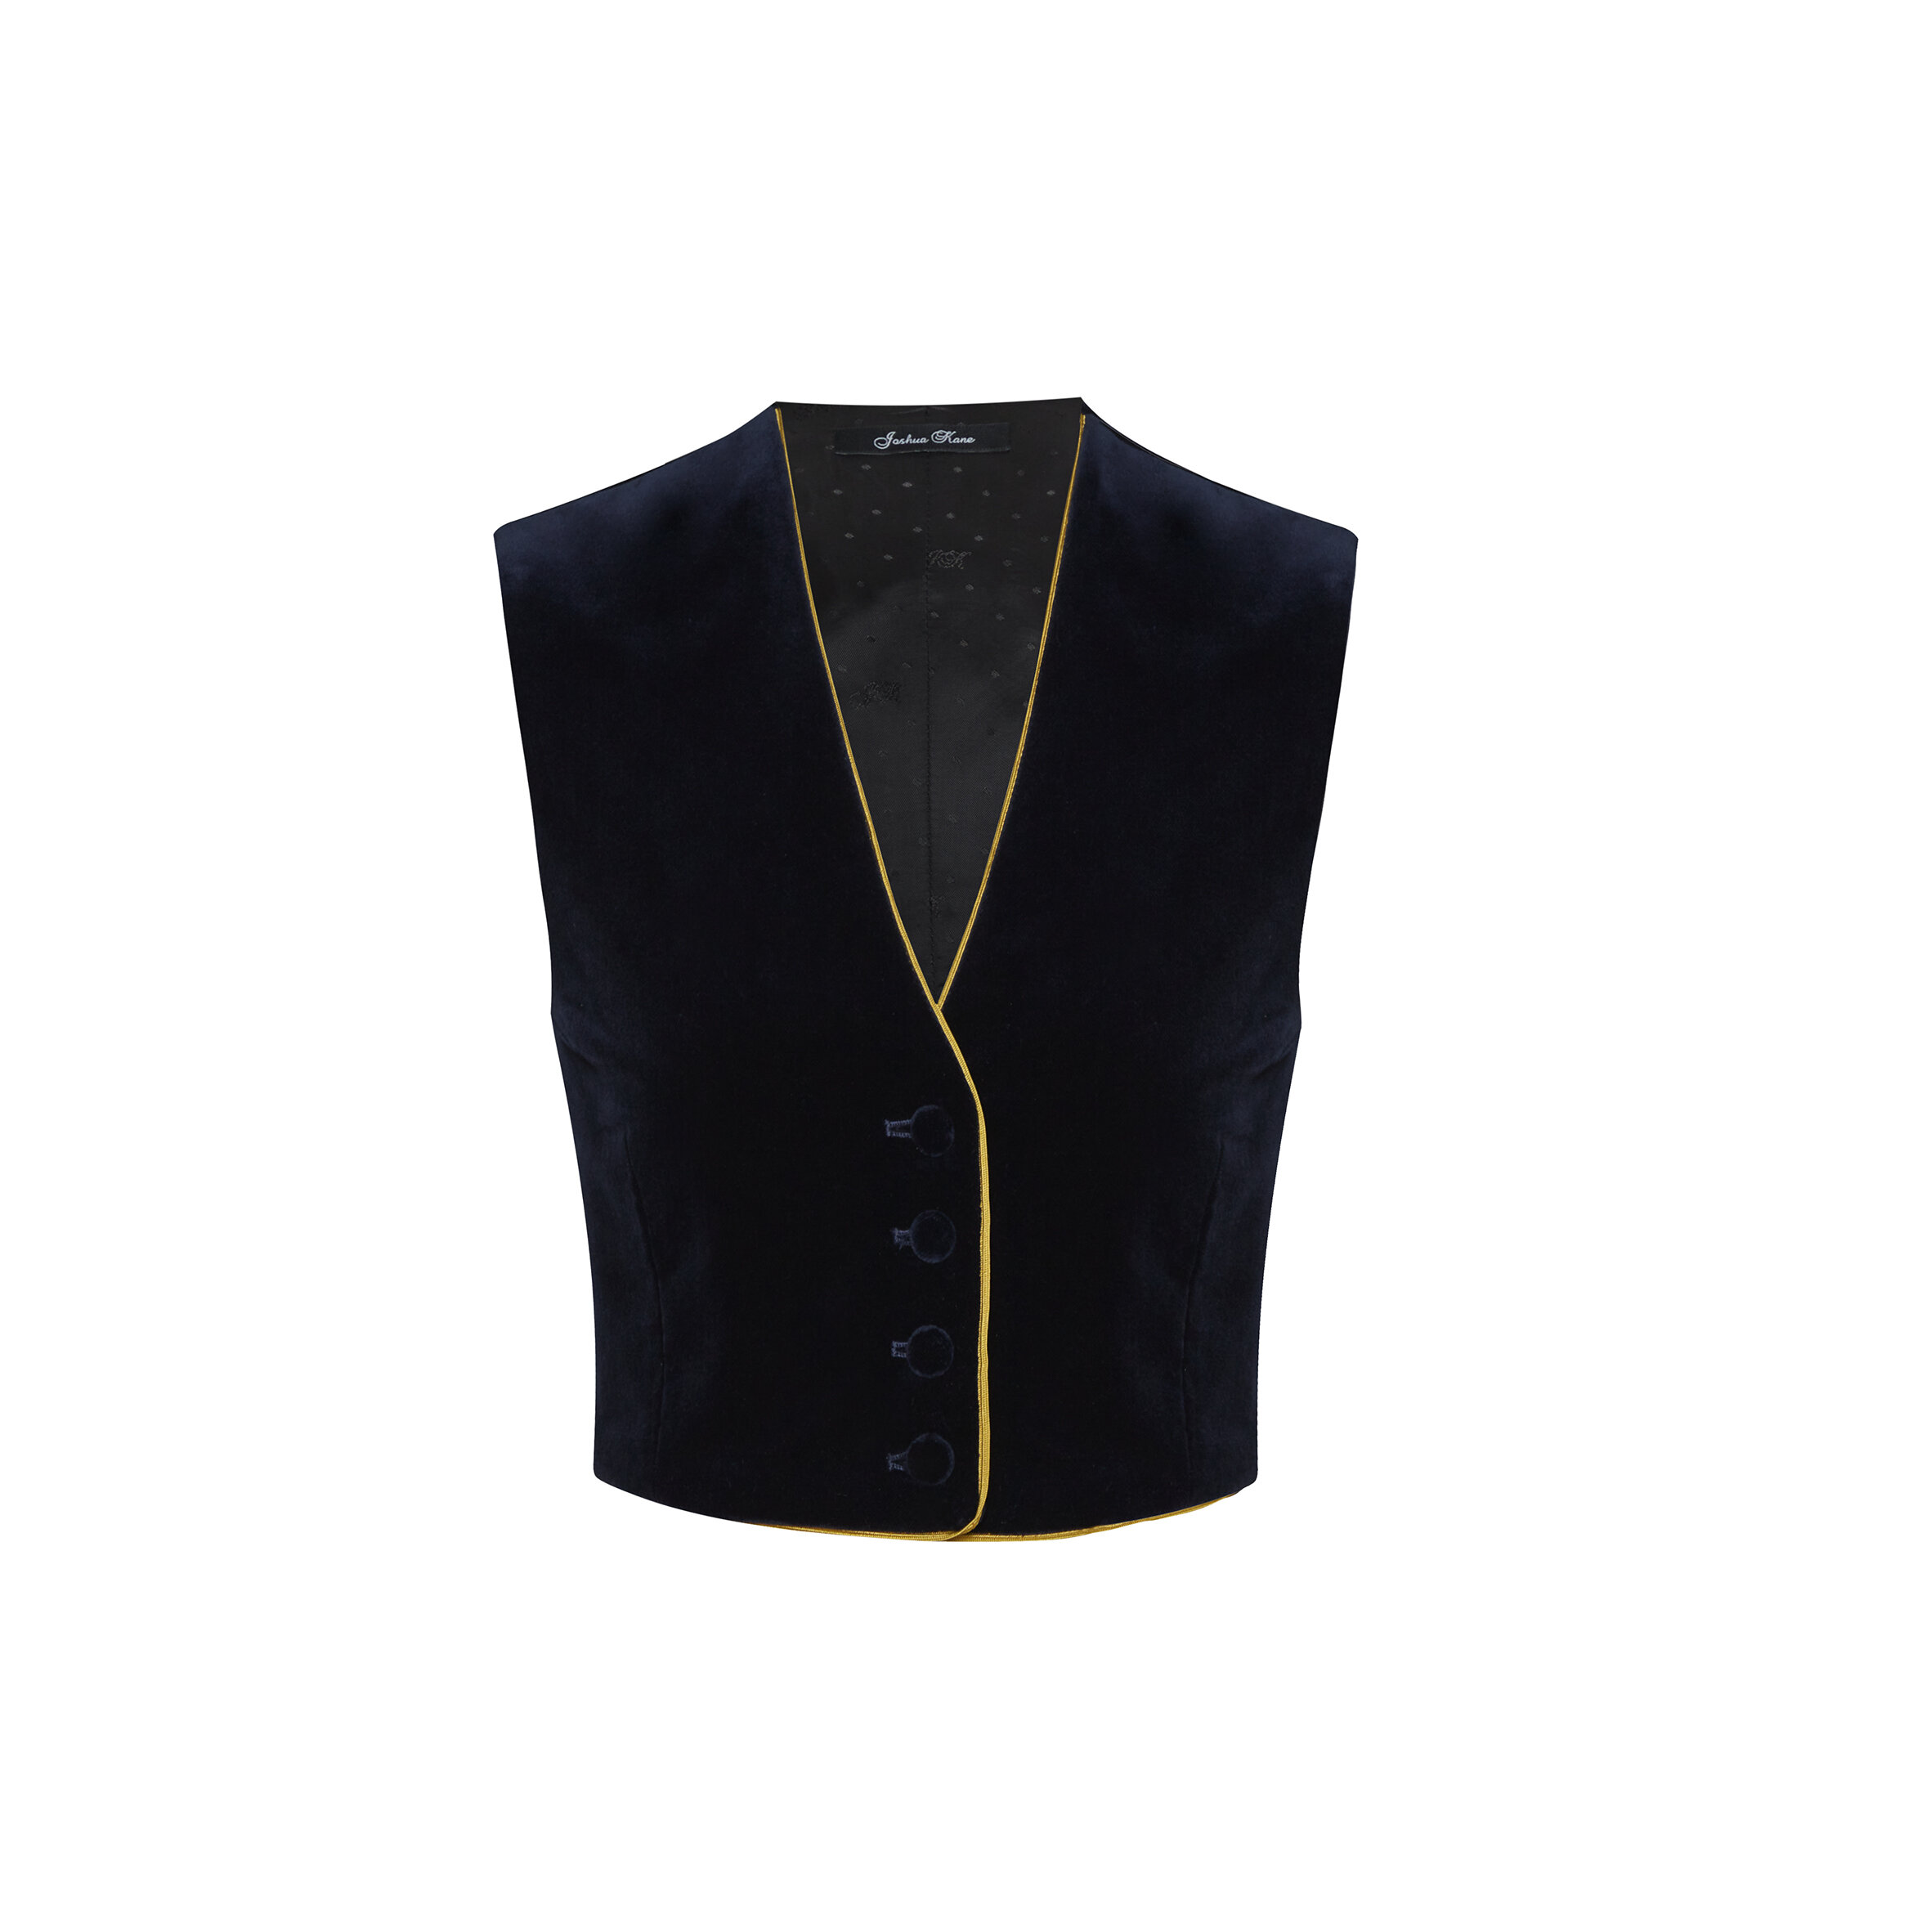 UK Men's Black Wedding Waistcoat Swirl Leaf 6 Button Jacquard Suit Vest Tailored 